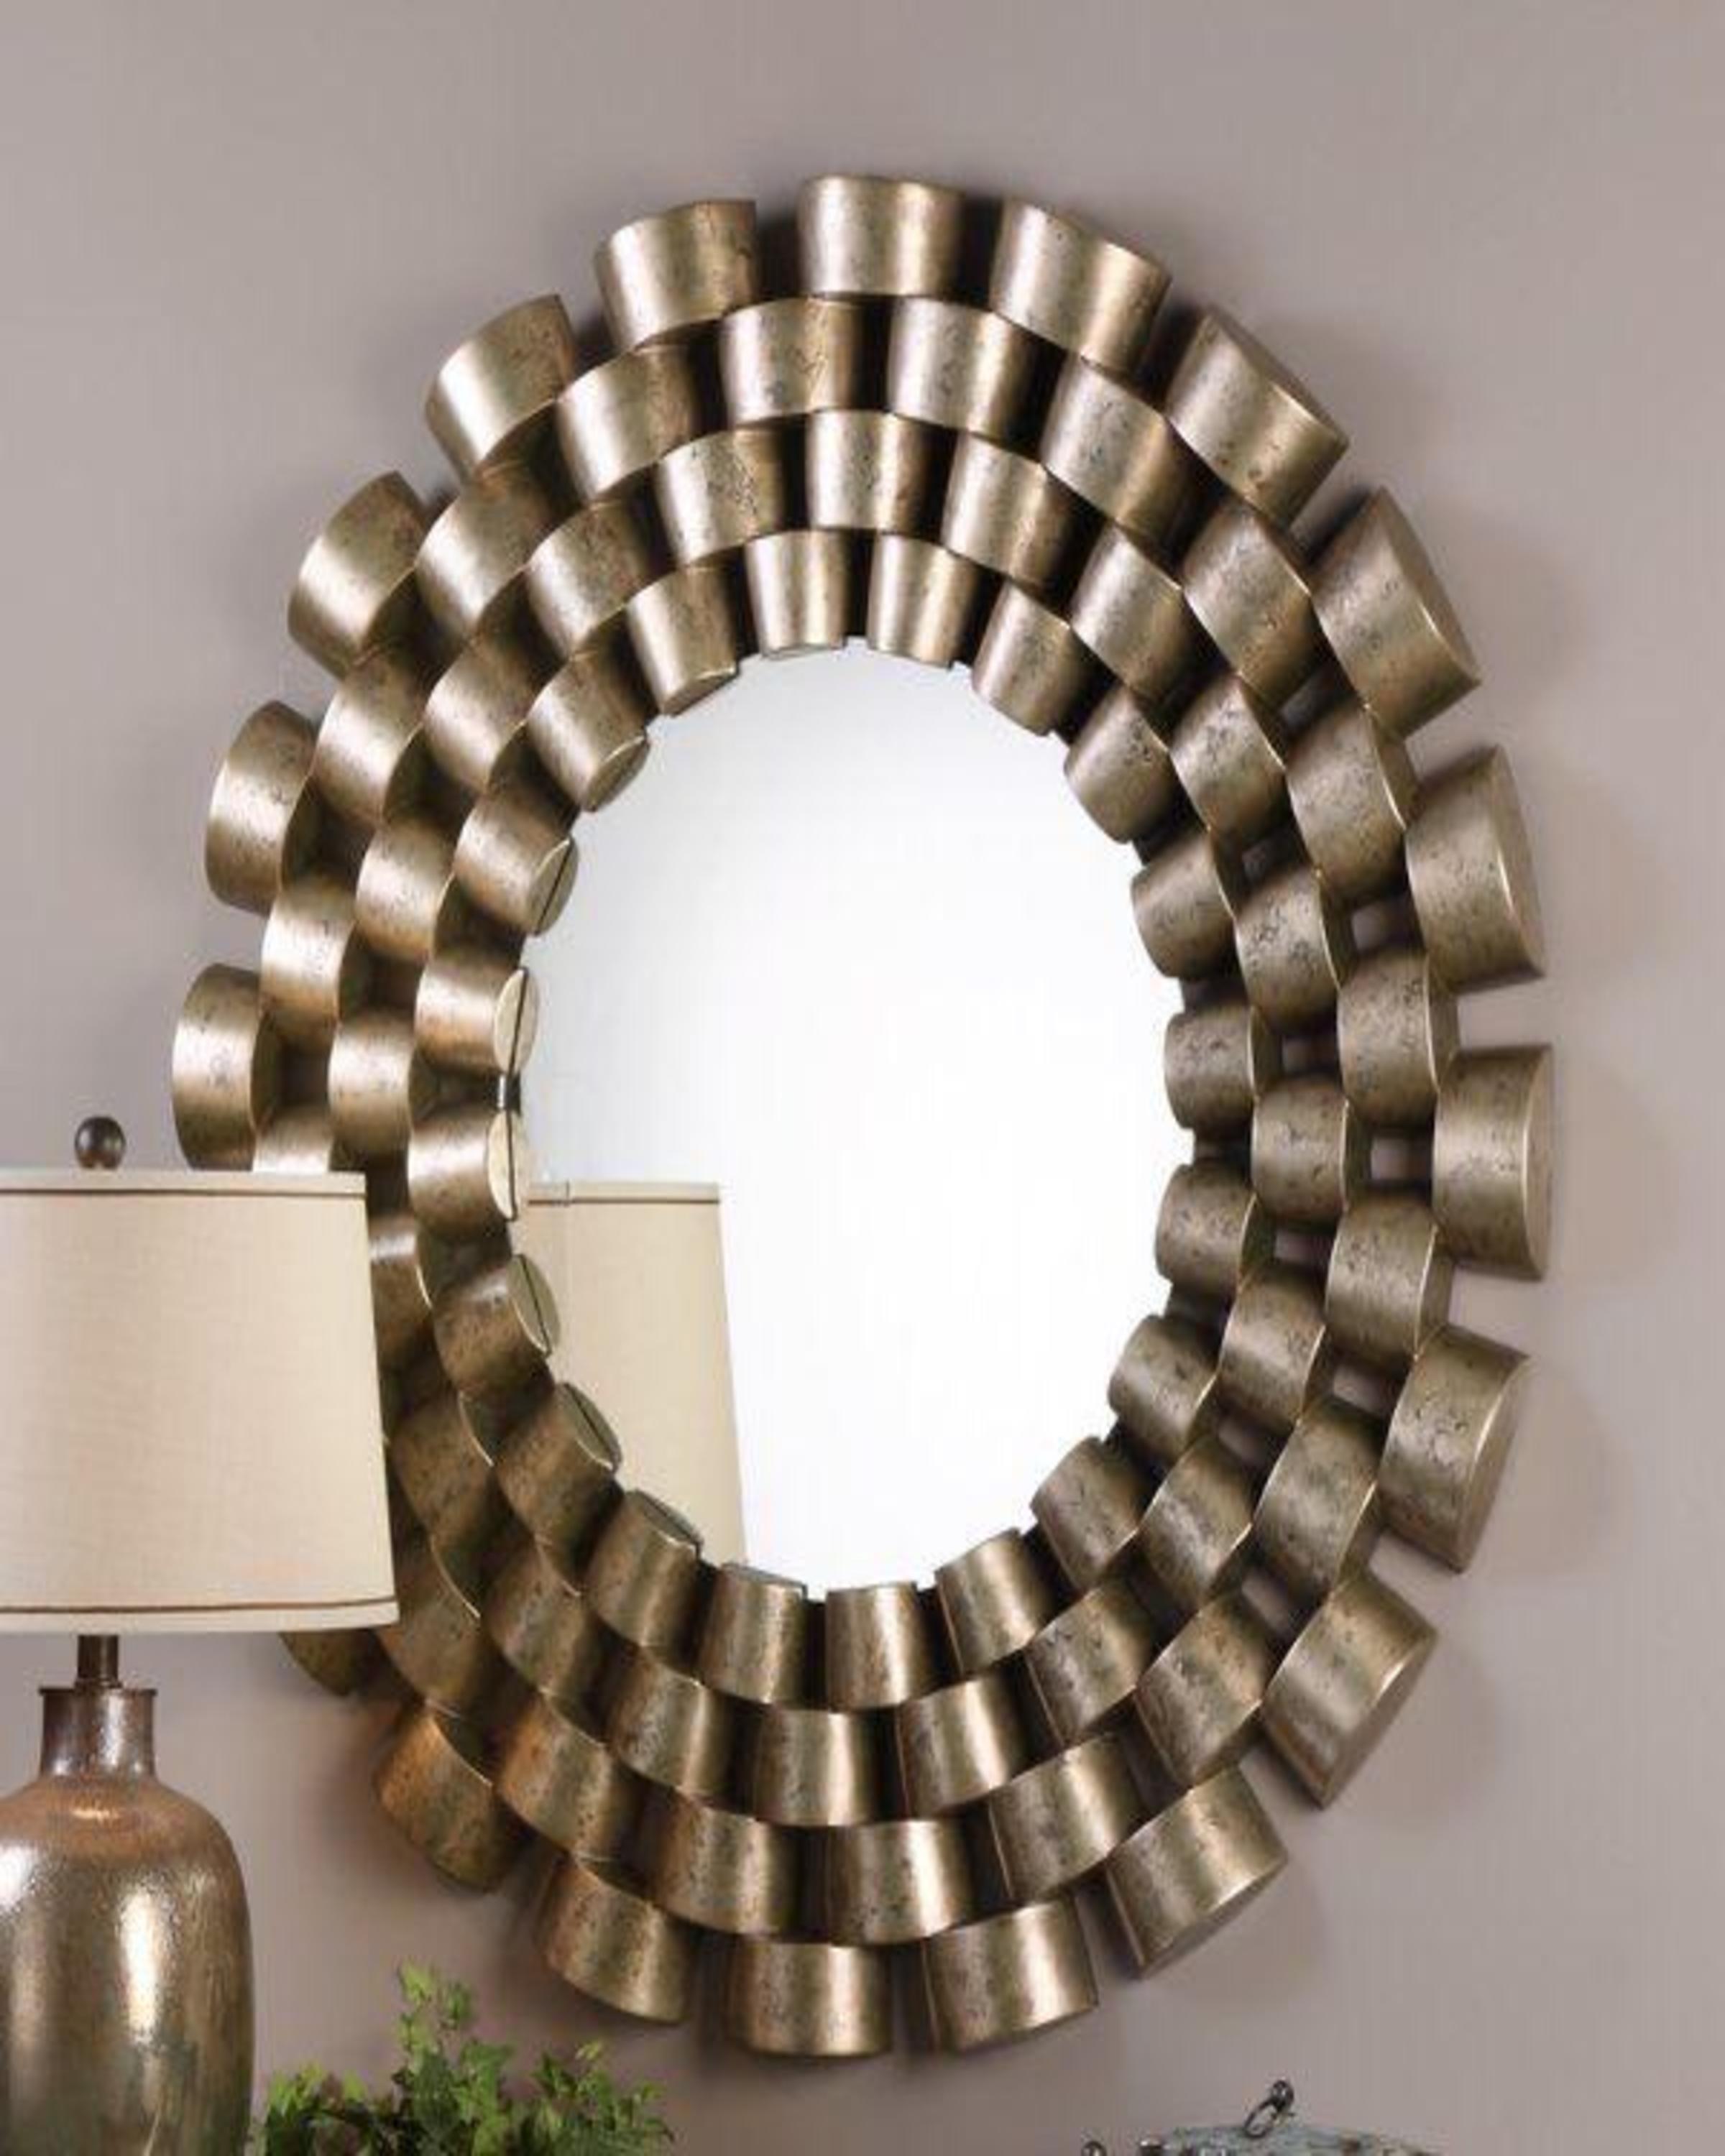 Luxury classic silver mirror